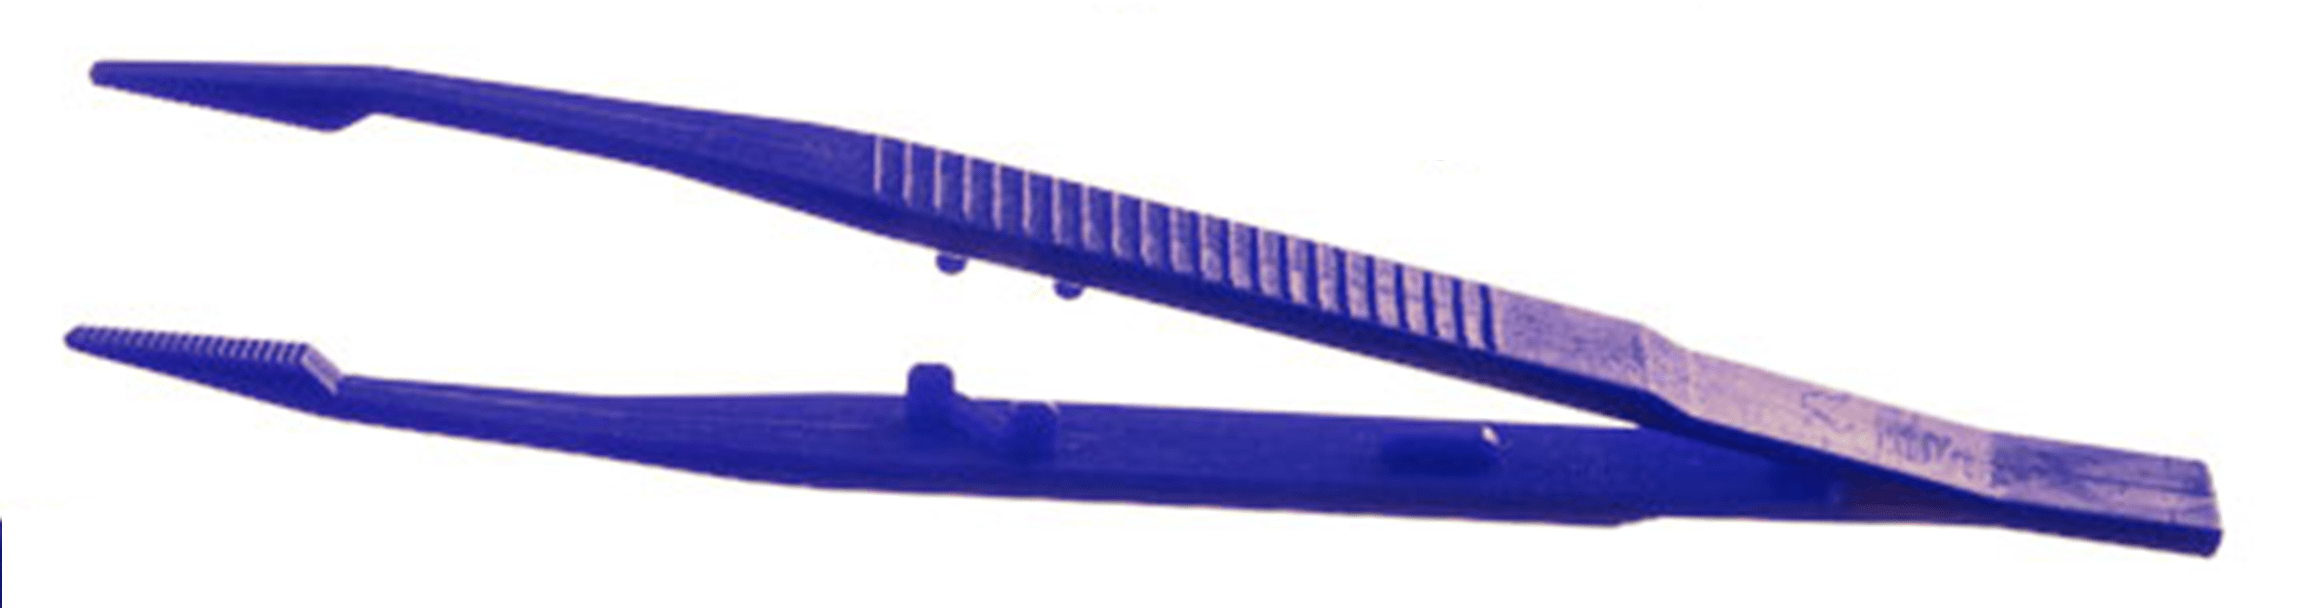 7"/12 Blue Lightweight Plastic Tweezer Set of 12